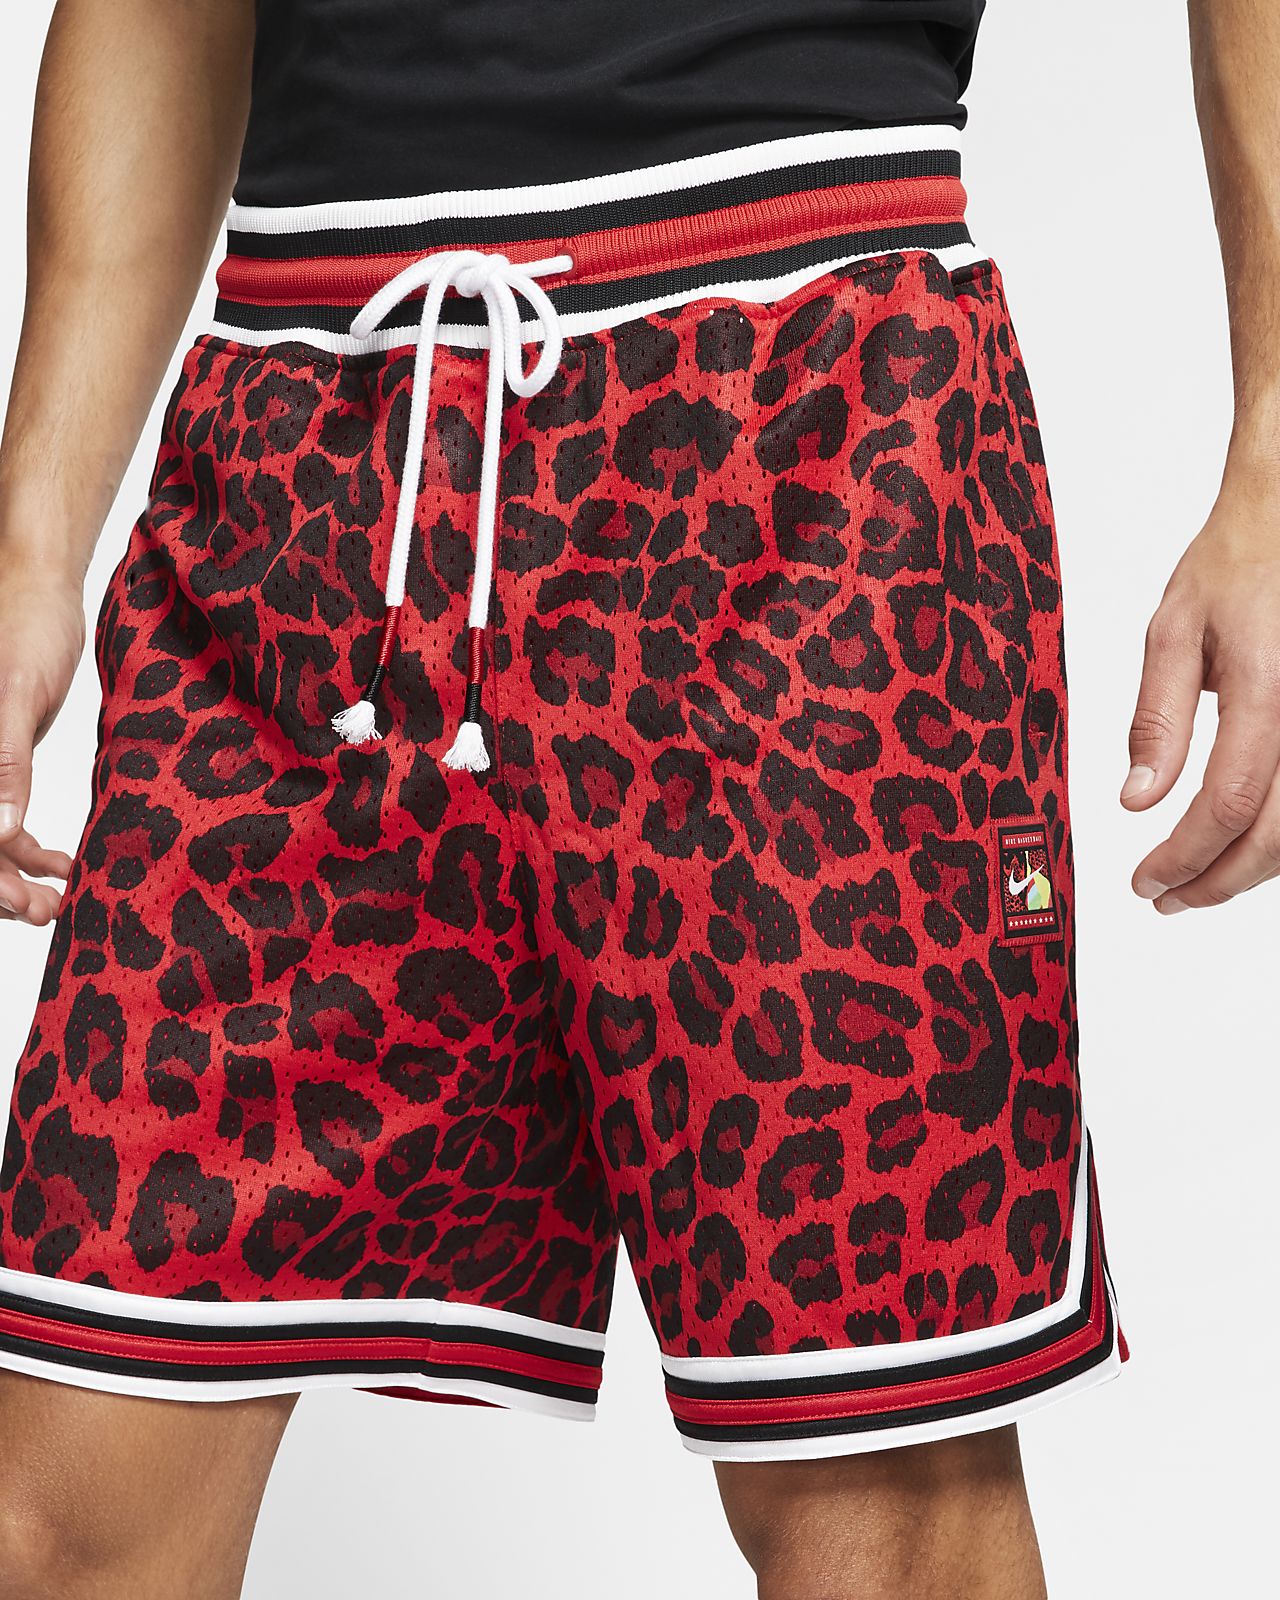 nike shorts leopard